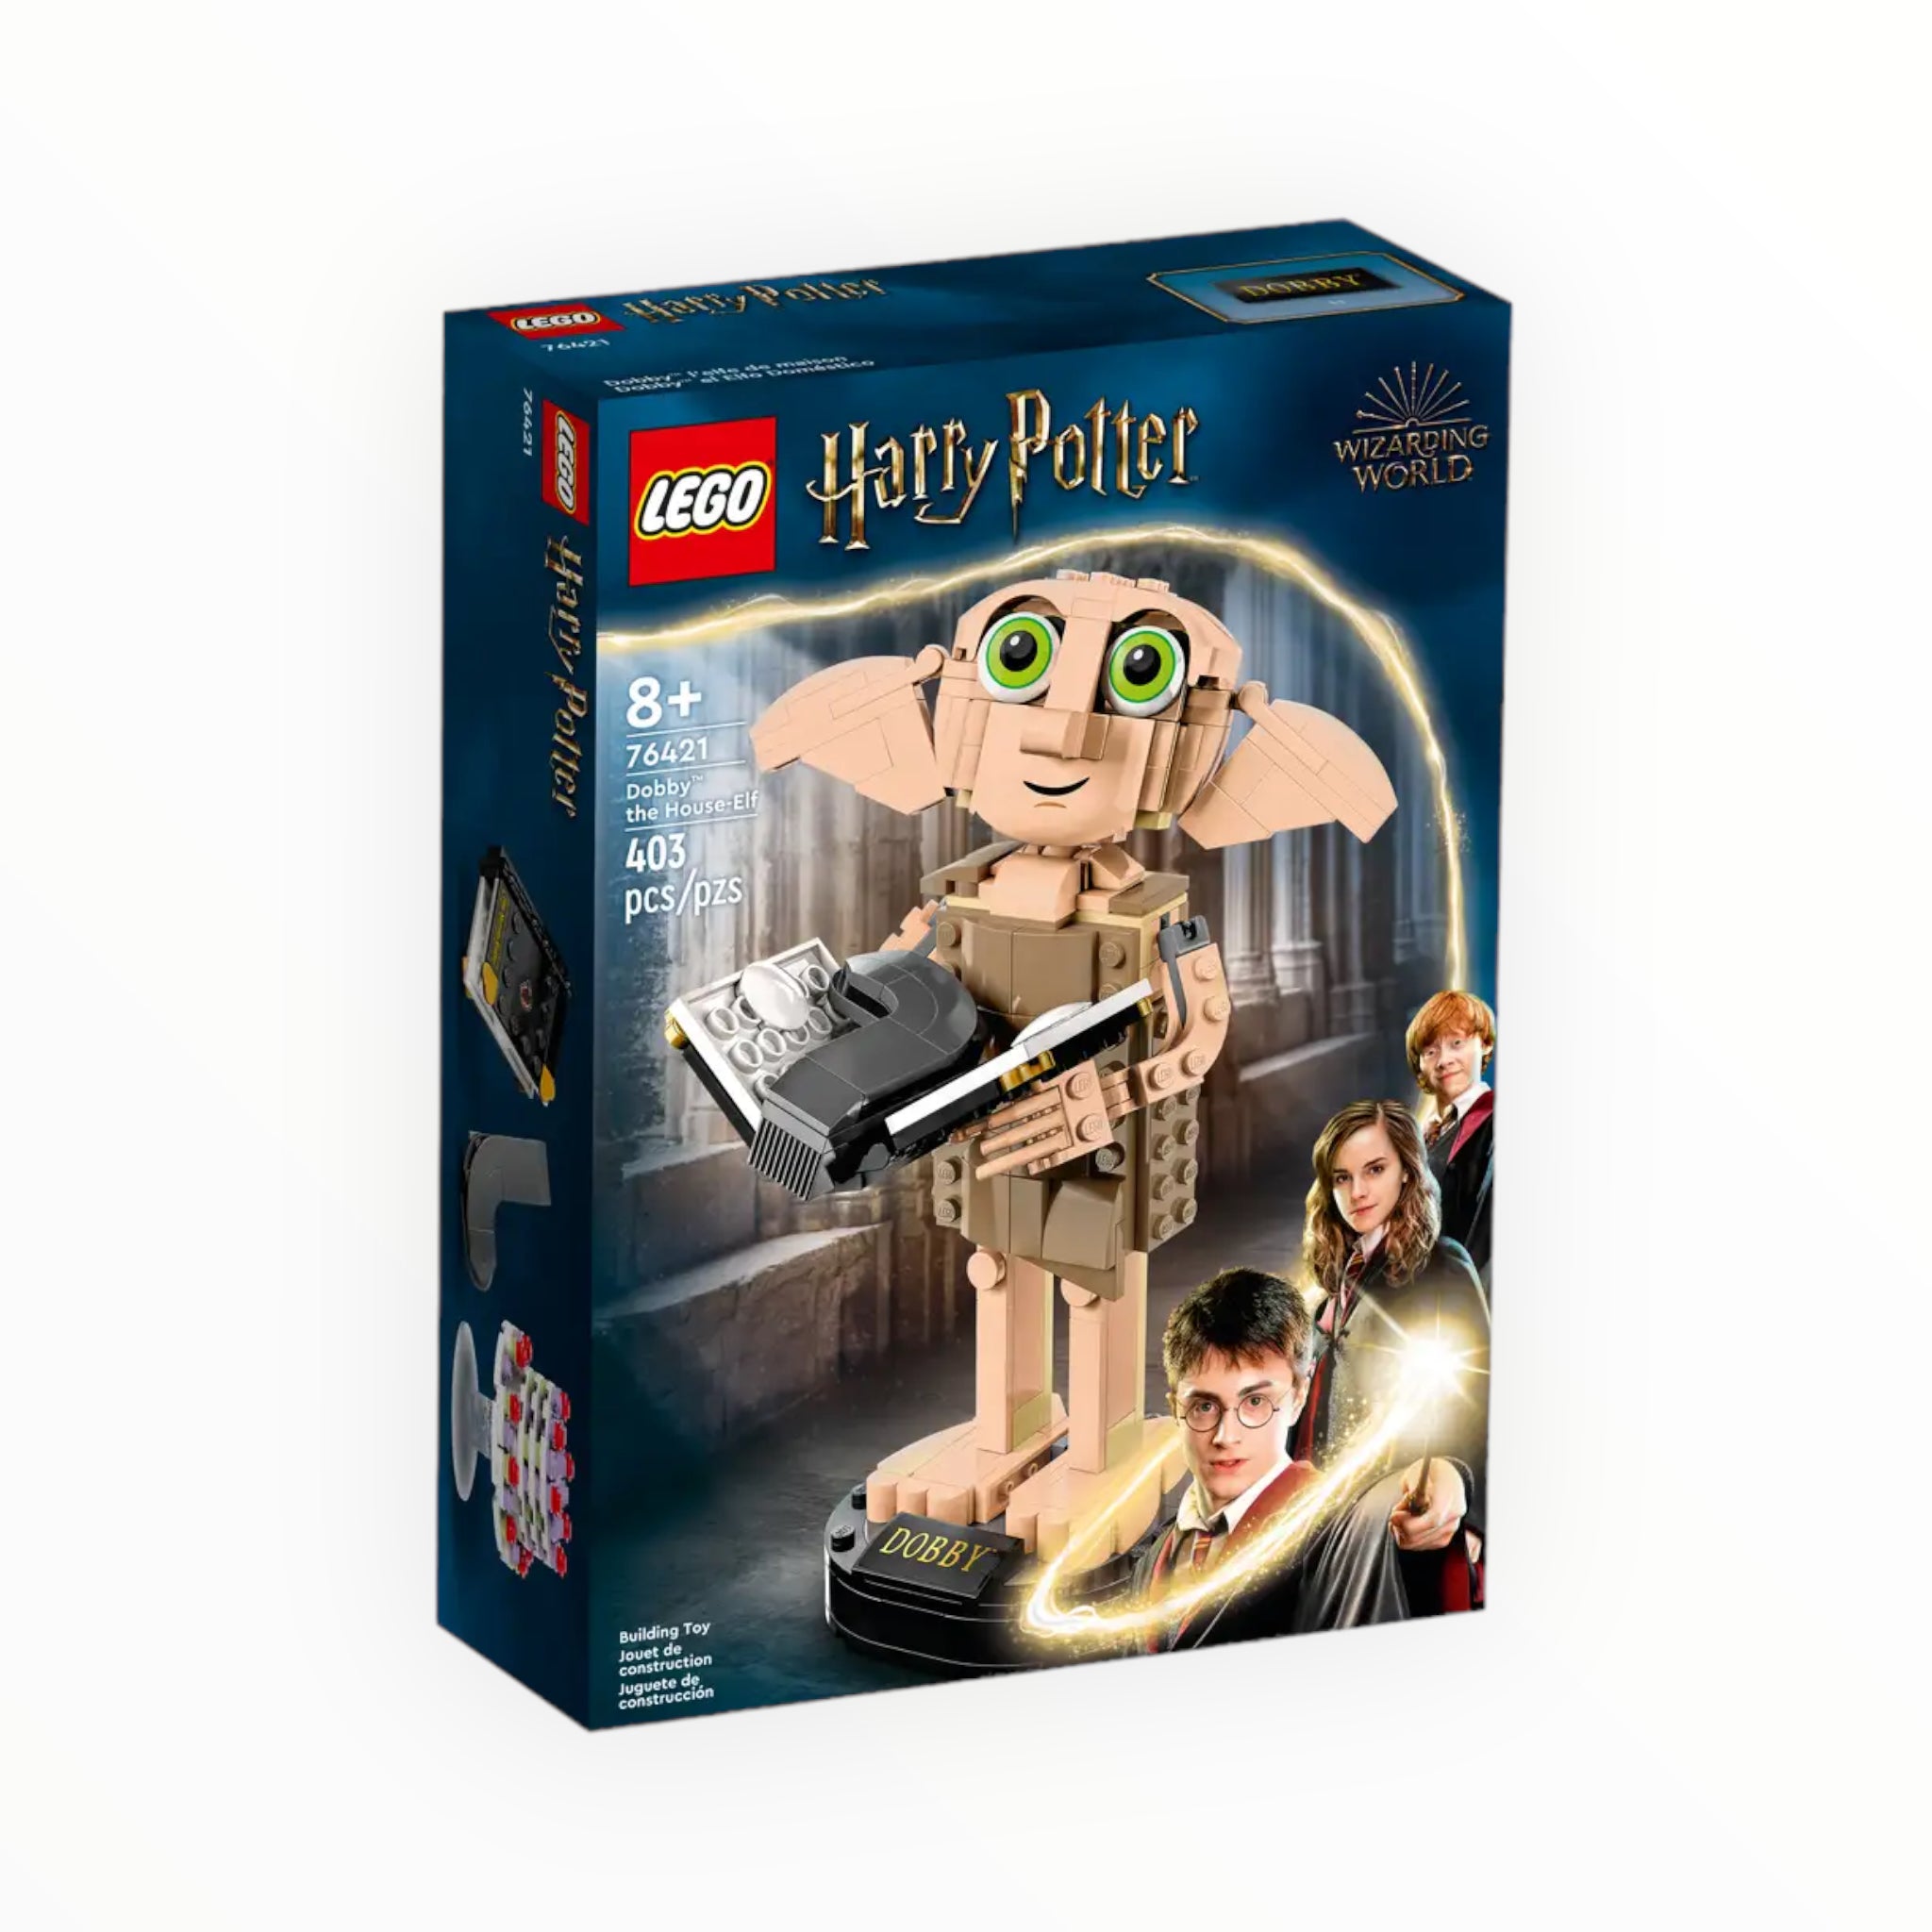 76421 Harry Potter Dobby the House-Elf